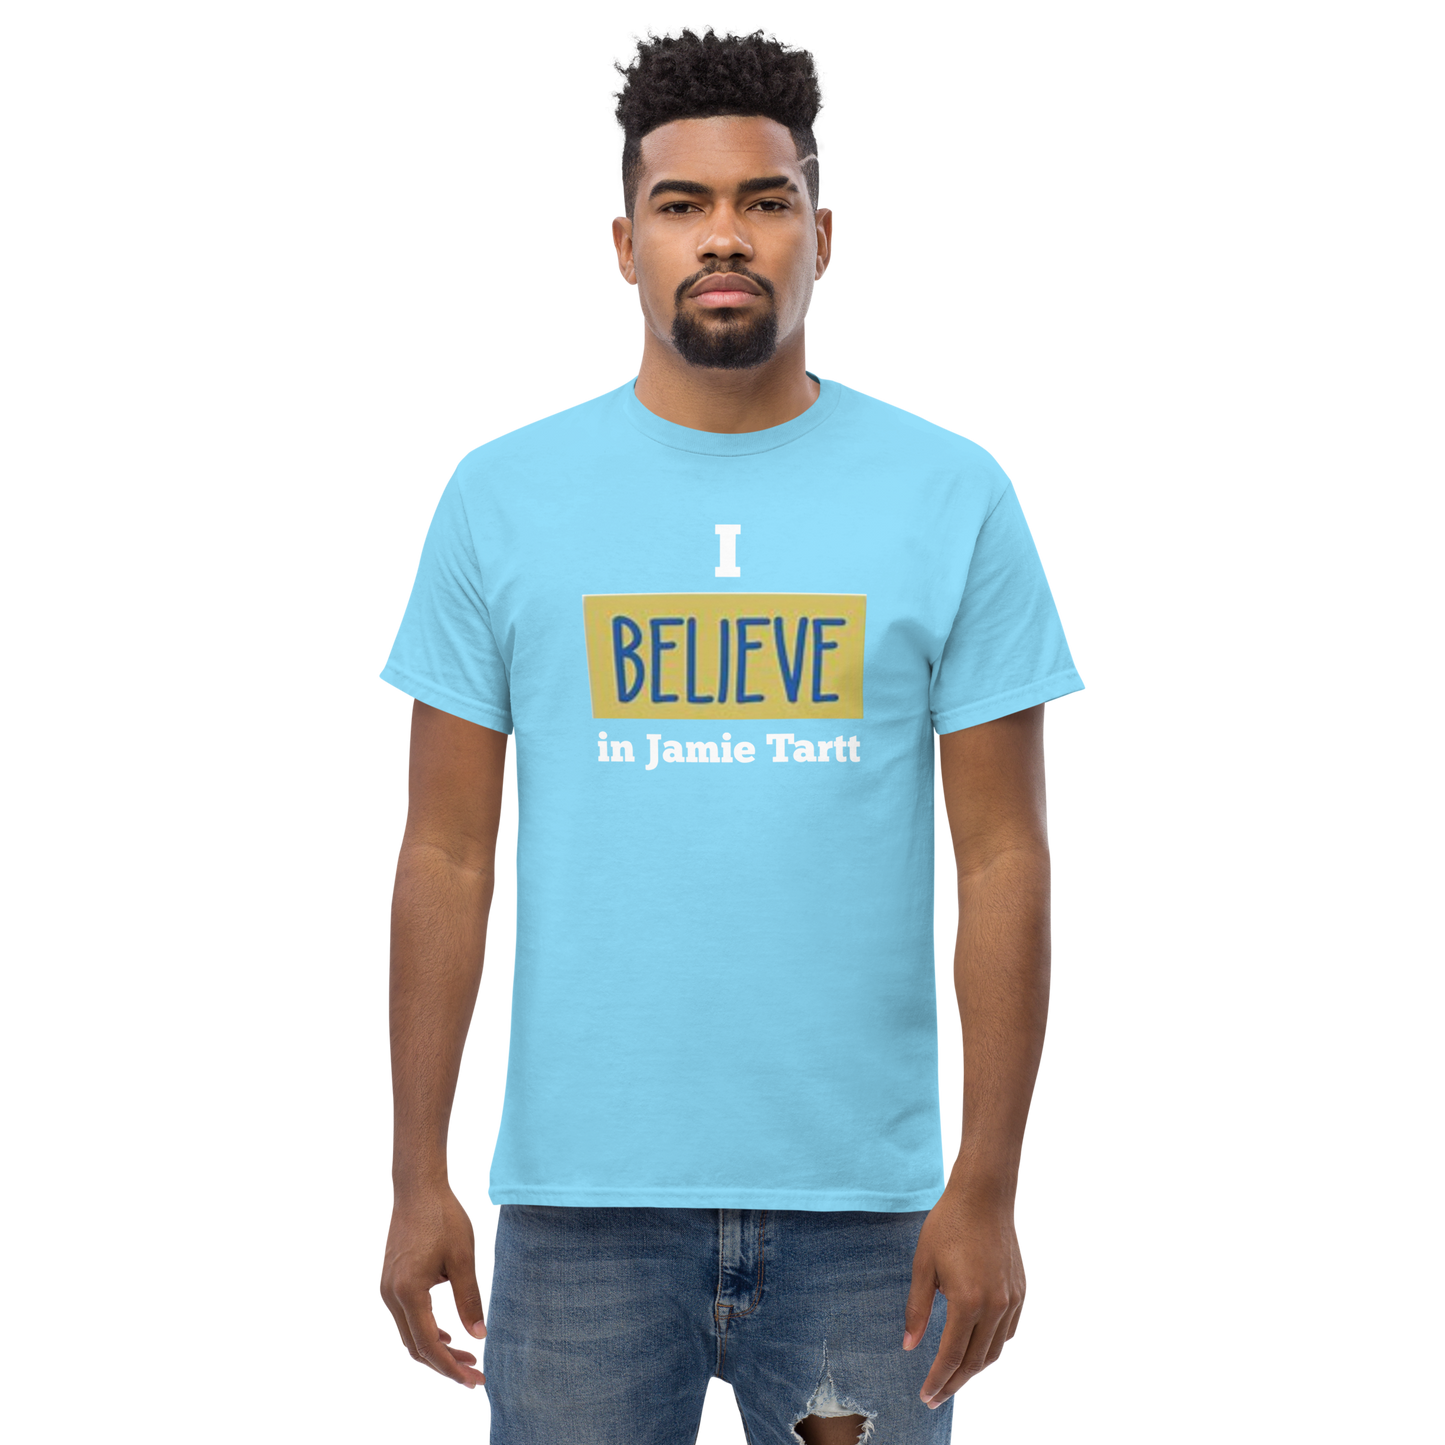 I Believe in Jamie Tartt T-Shirt